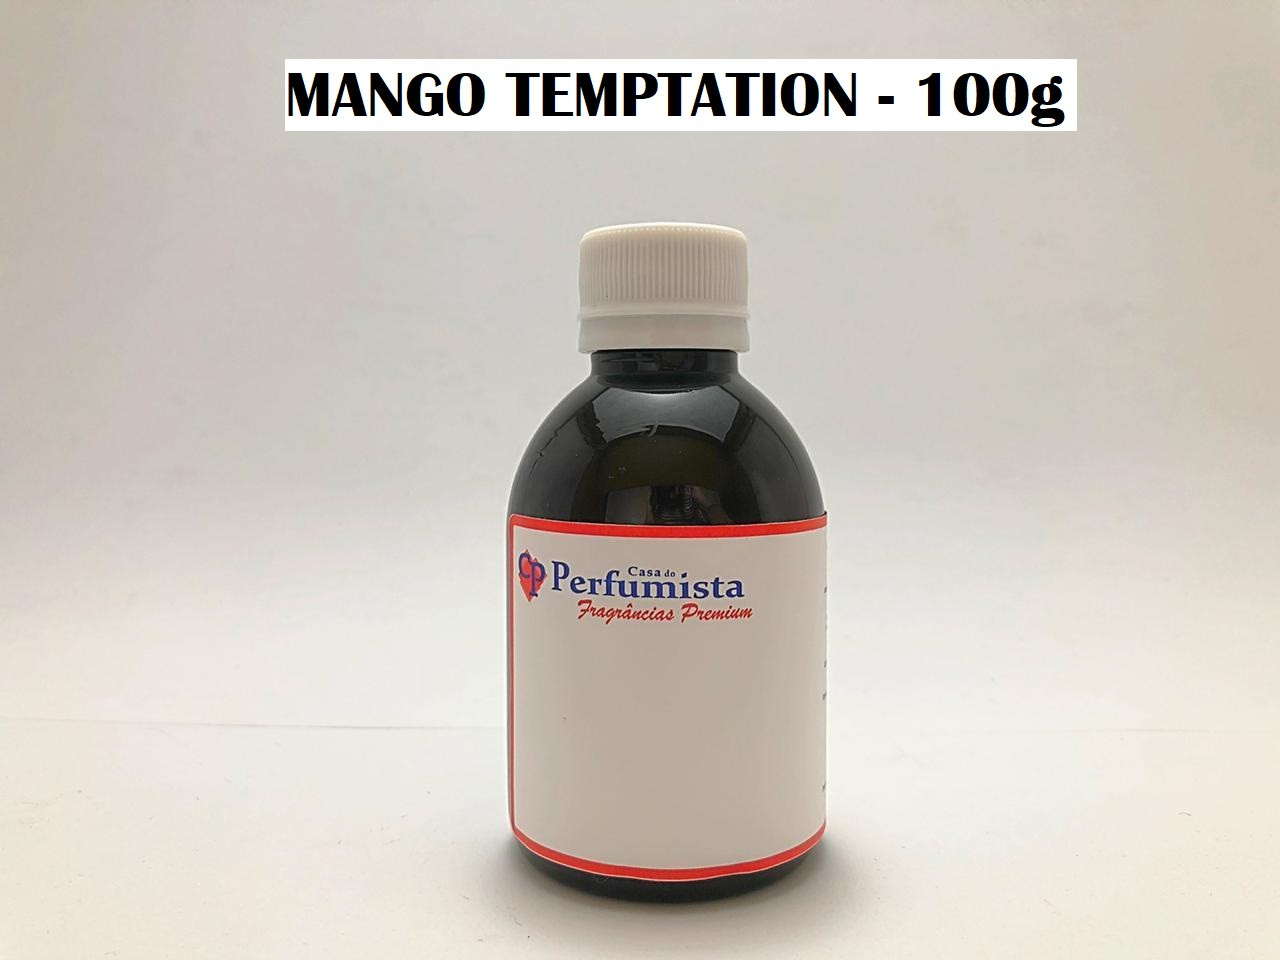 MANGO TEMPTATION - 100g